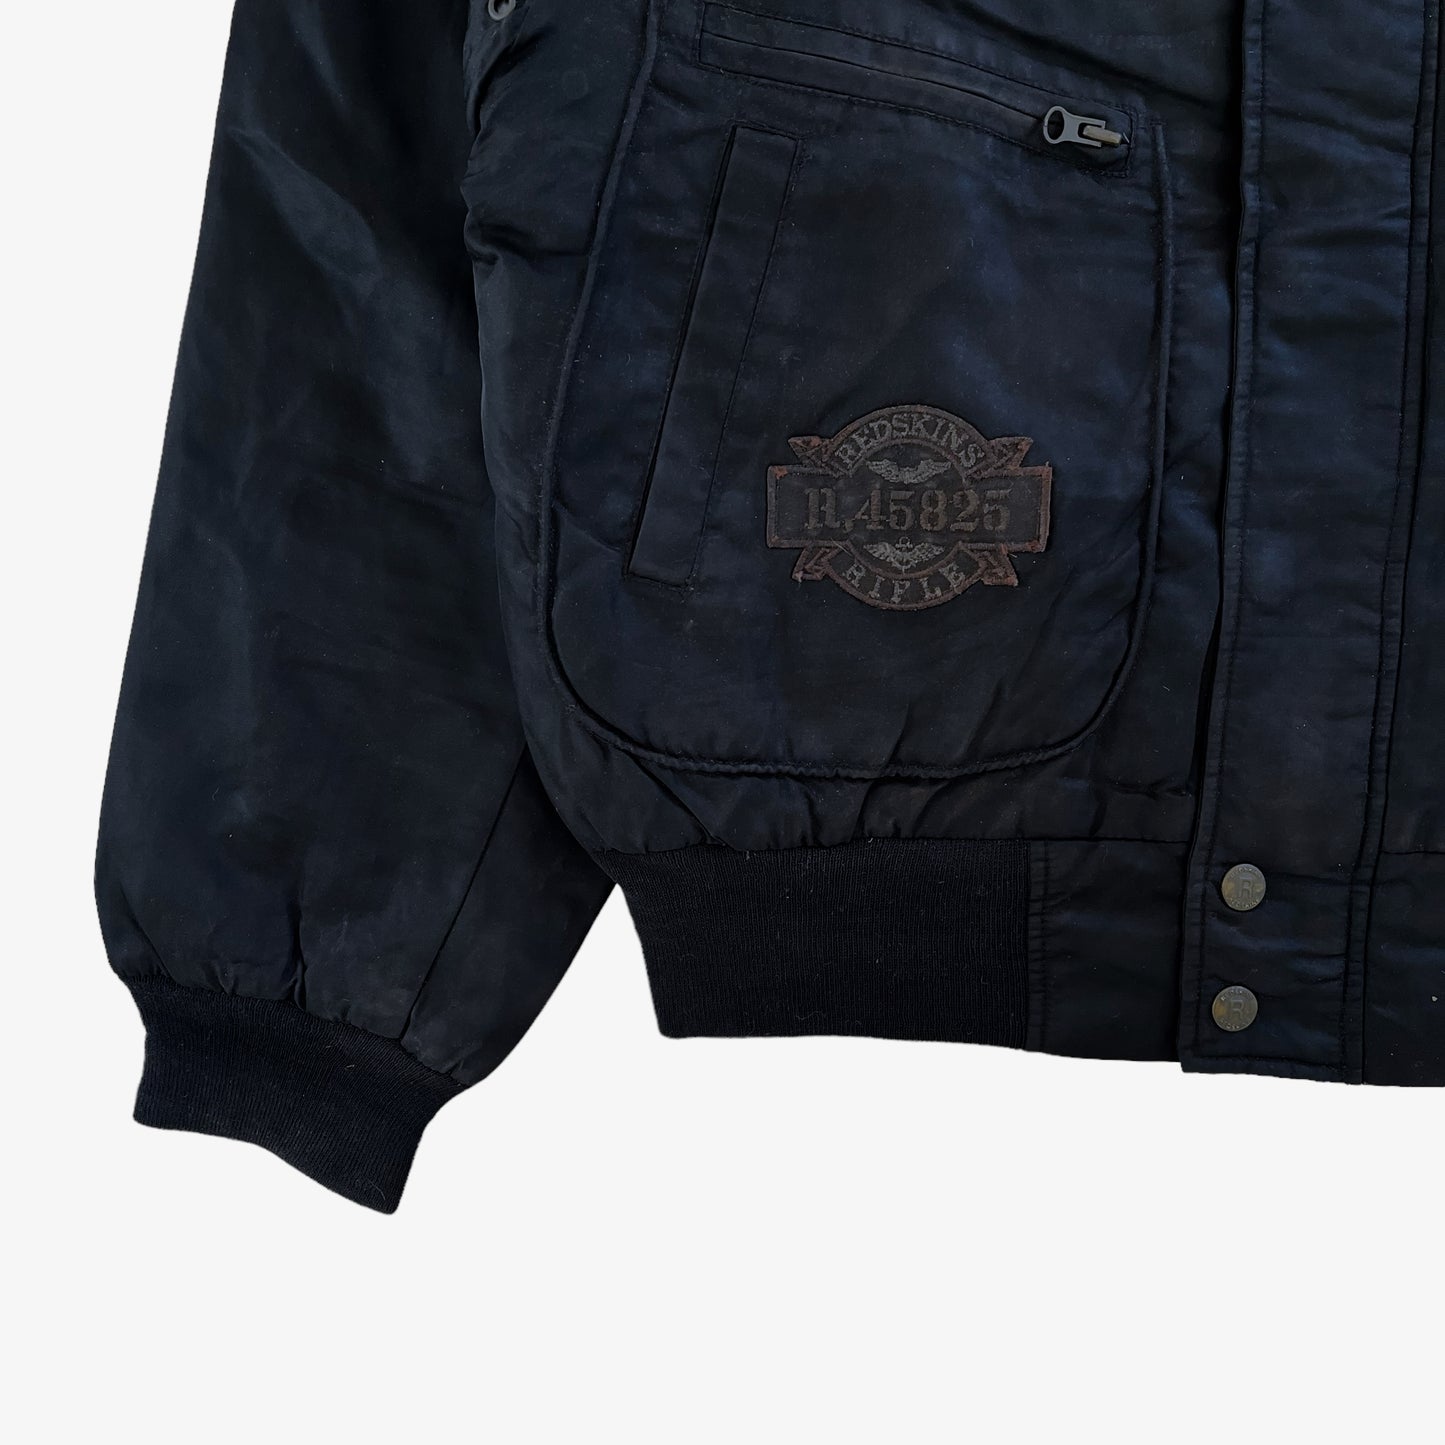 Vintage 90s Redskins Territoire Black Bomber Jacket With Fur Collar Cuff - Casspios Dream